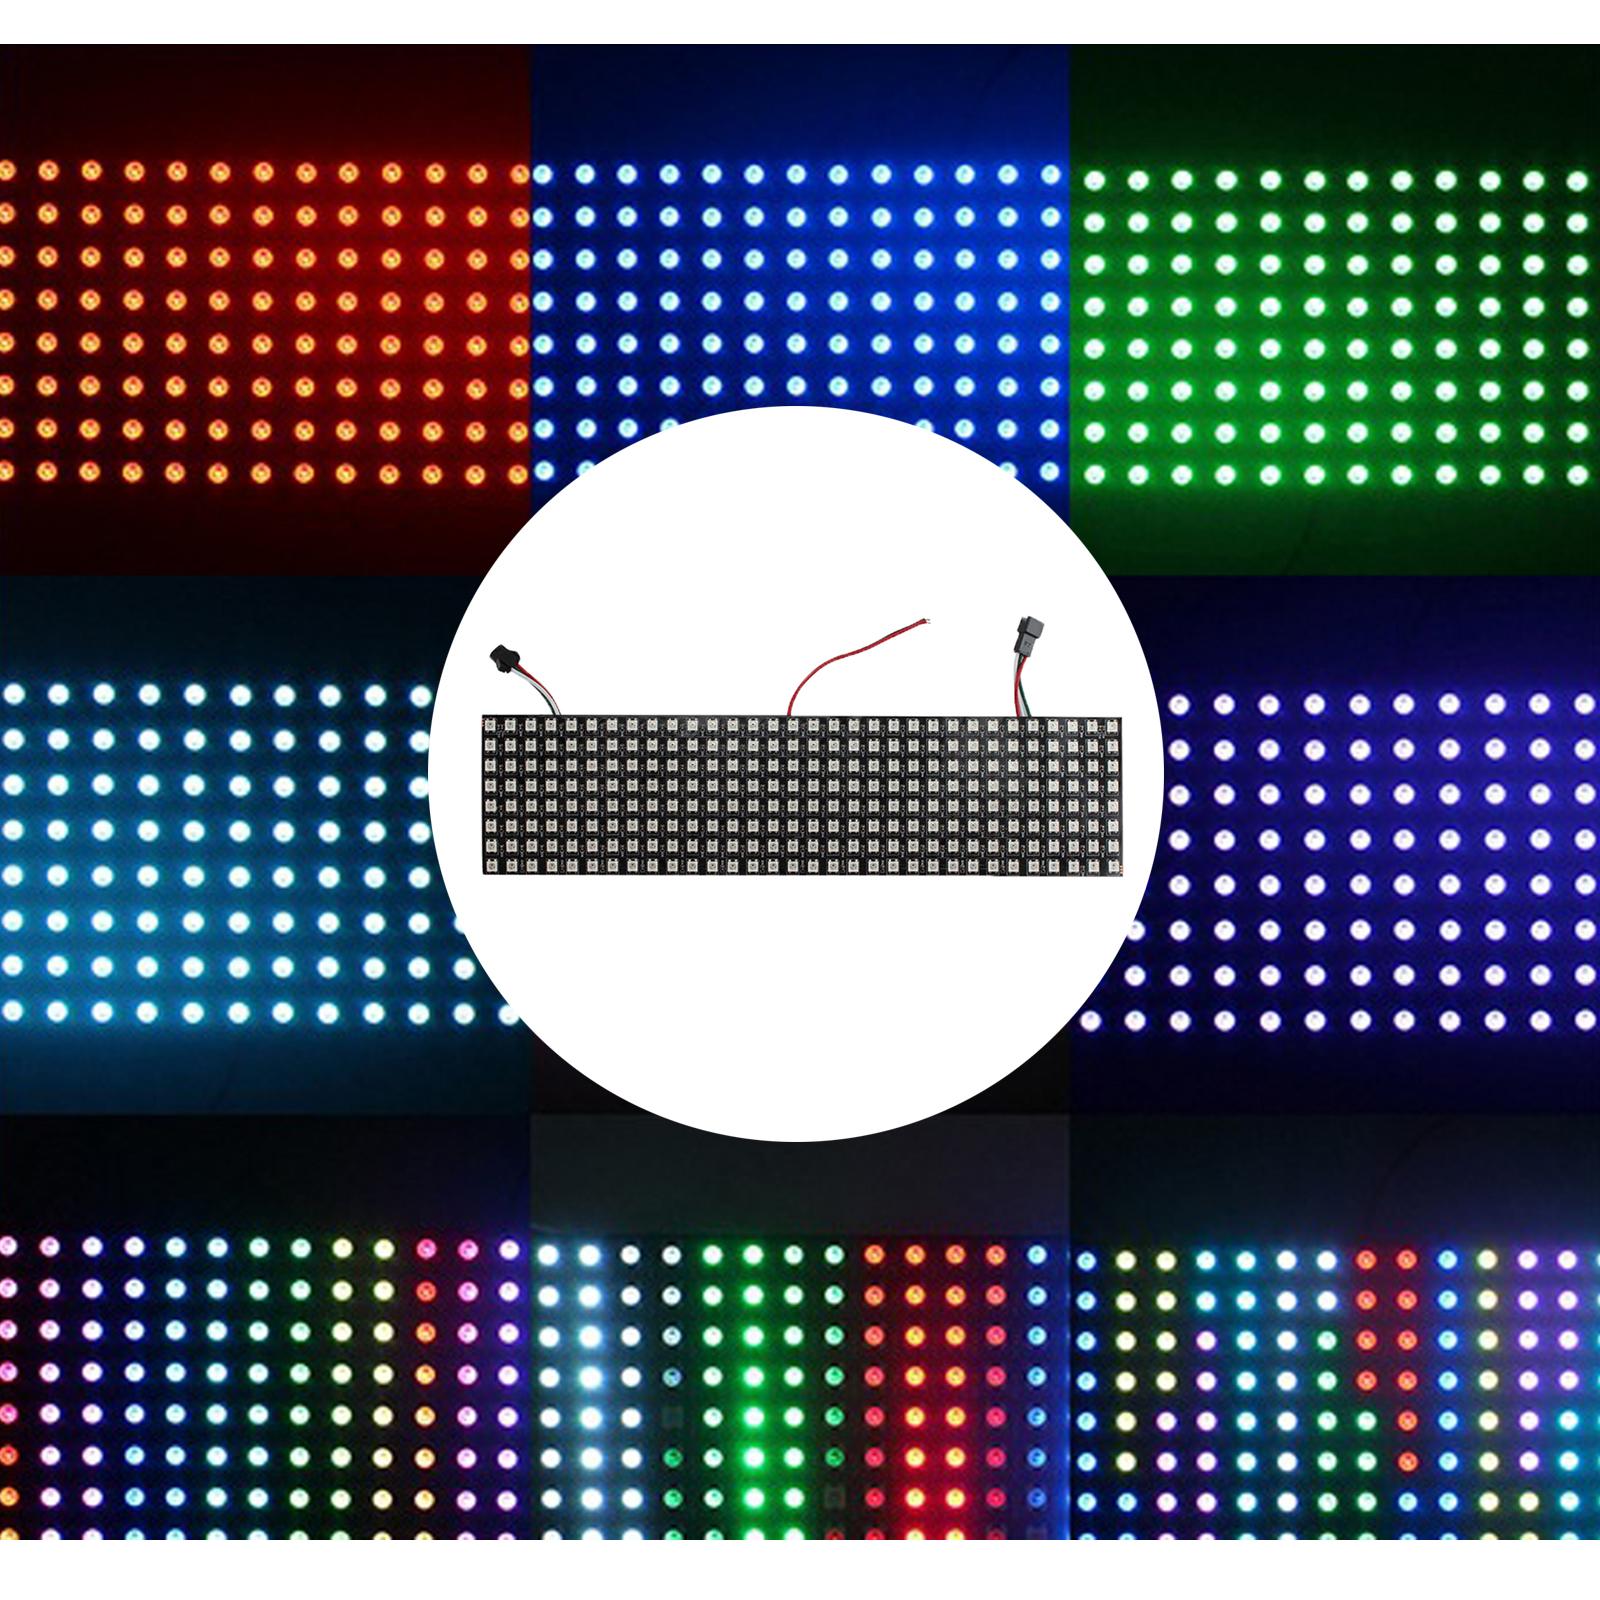 LED Pixels Matrix Panel WS2812B RGB Digital Image Video Text Display 8x32cm